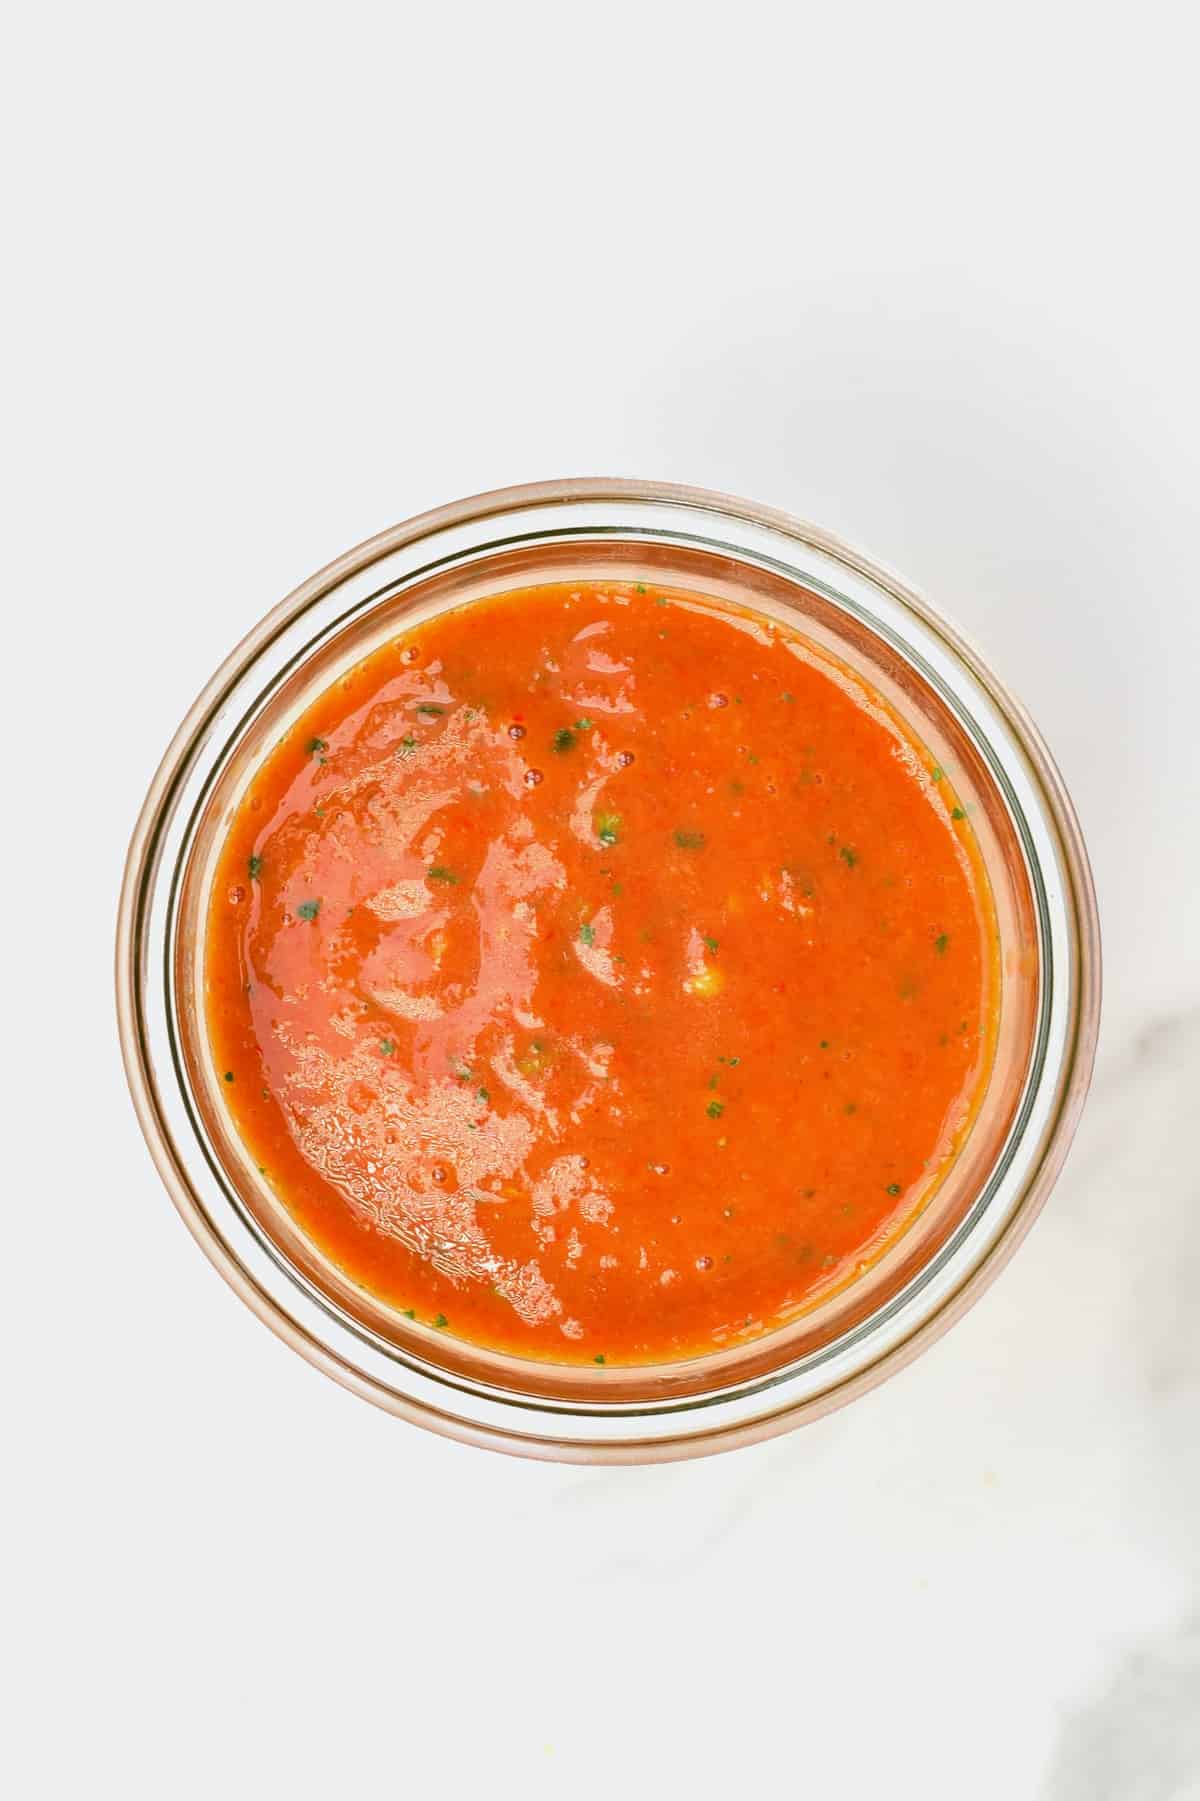 Mexican Salsa Roja Recipe (Roja Sauce) - Alphafoodie